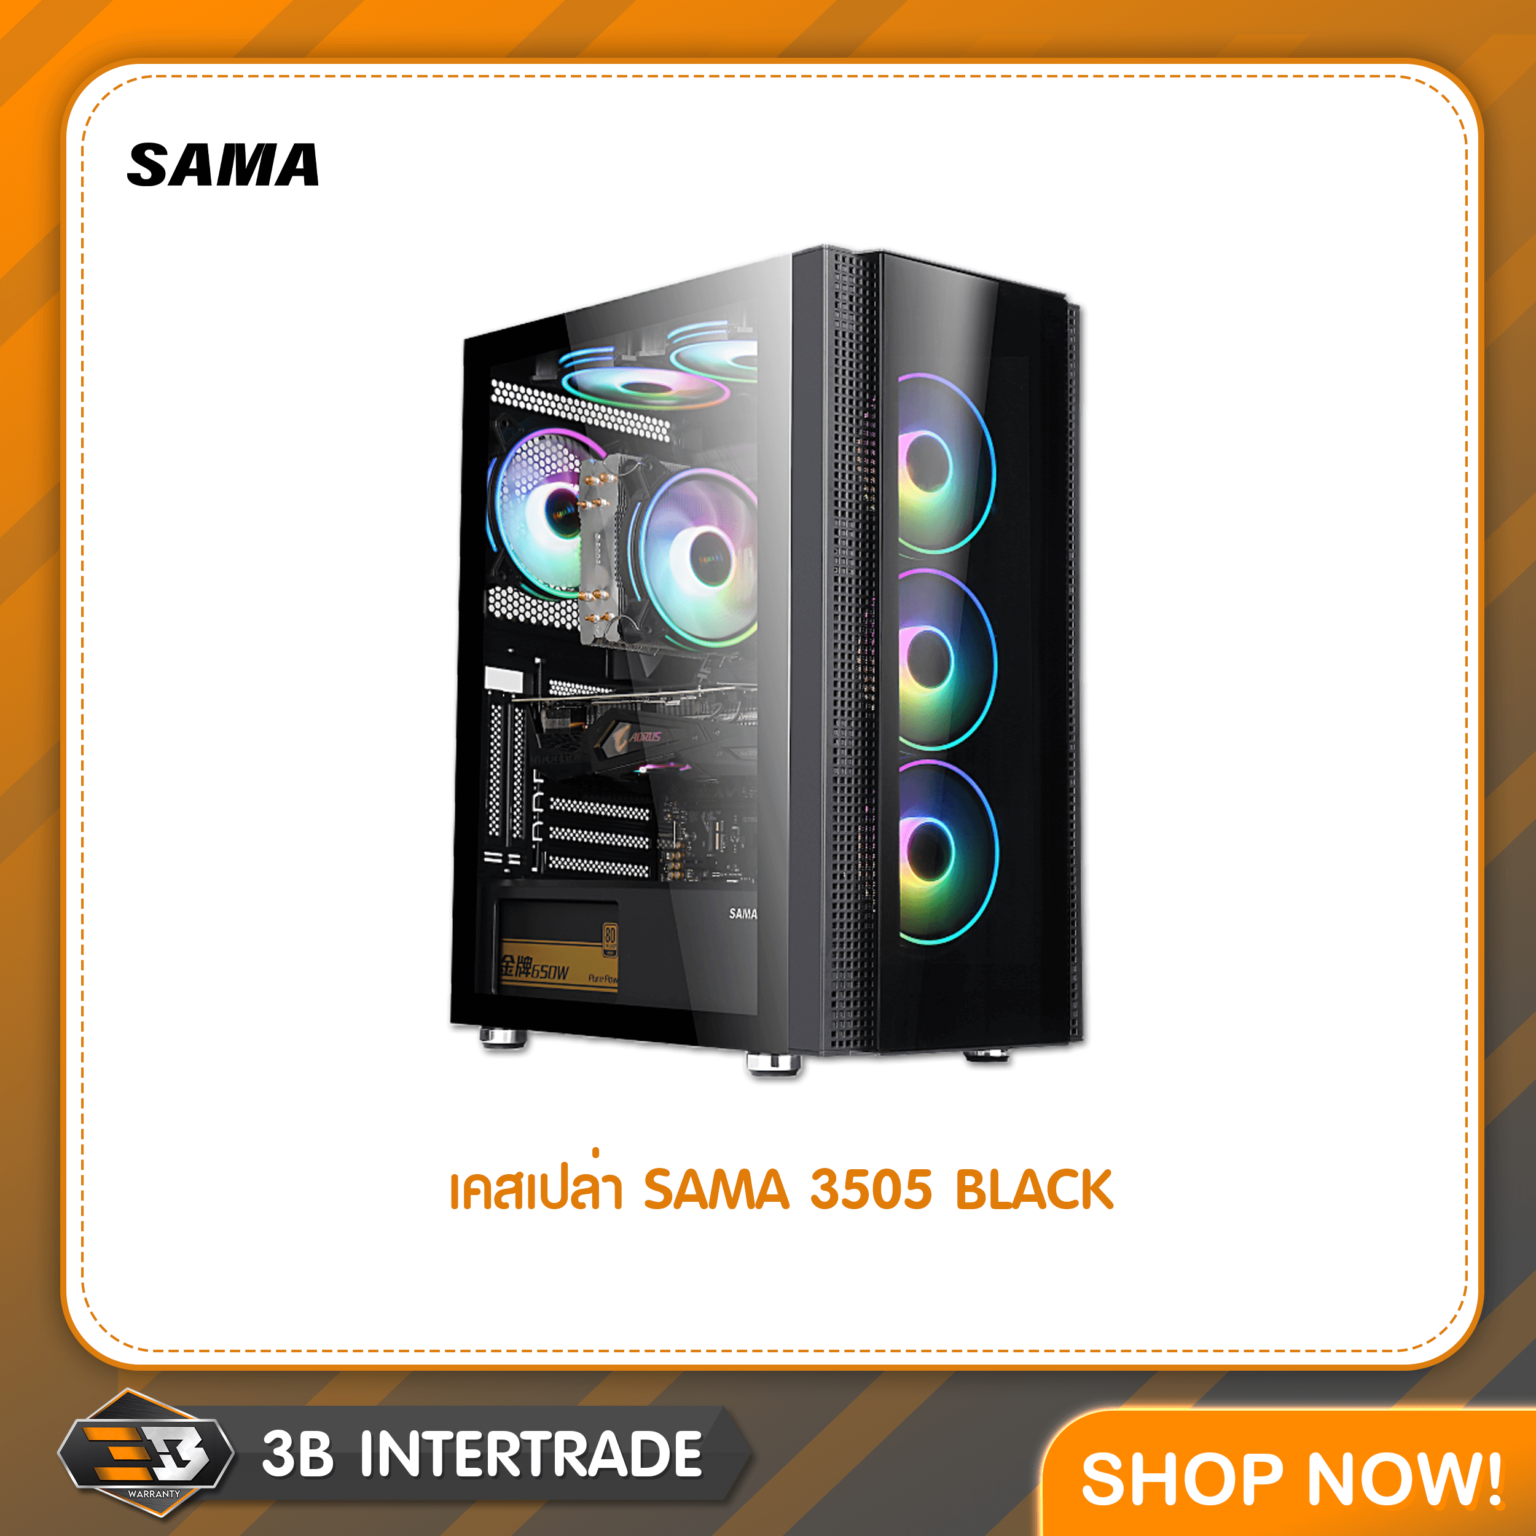 Case(เคส) SAMA 3505 BLACK